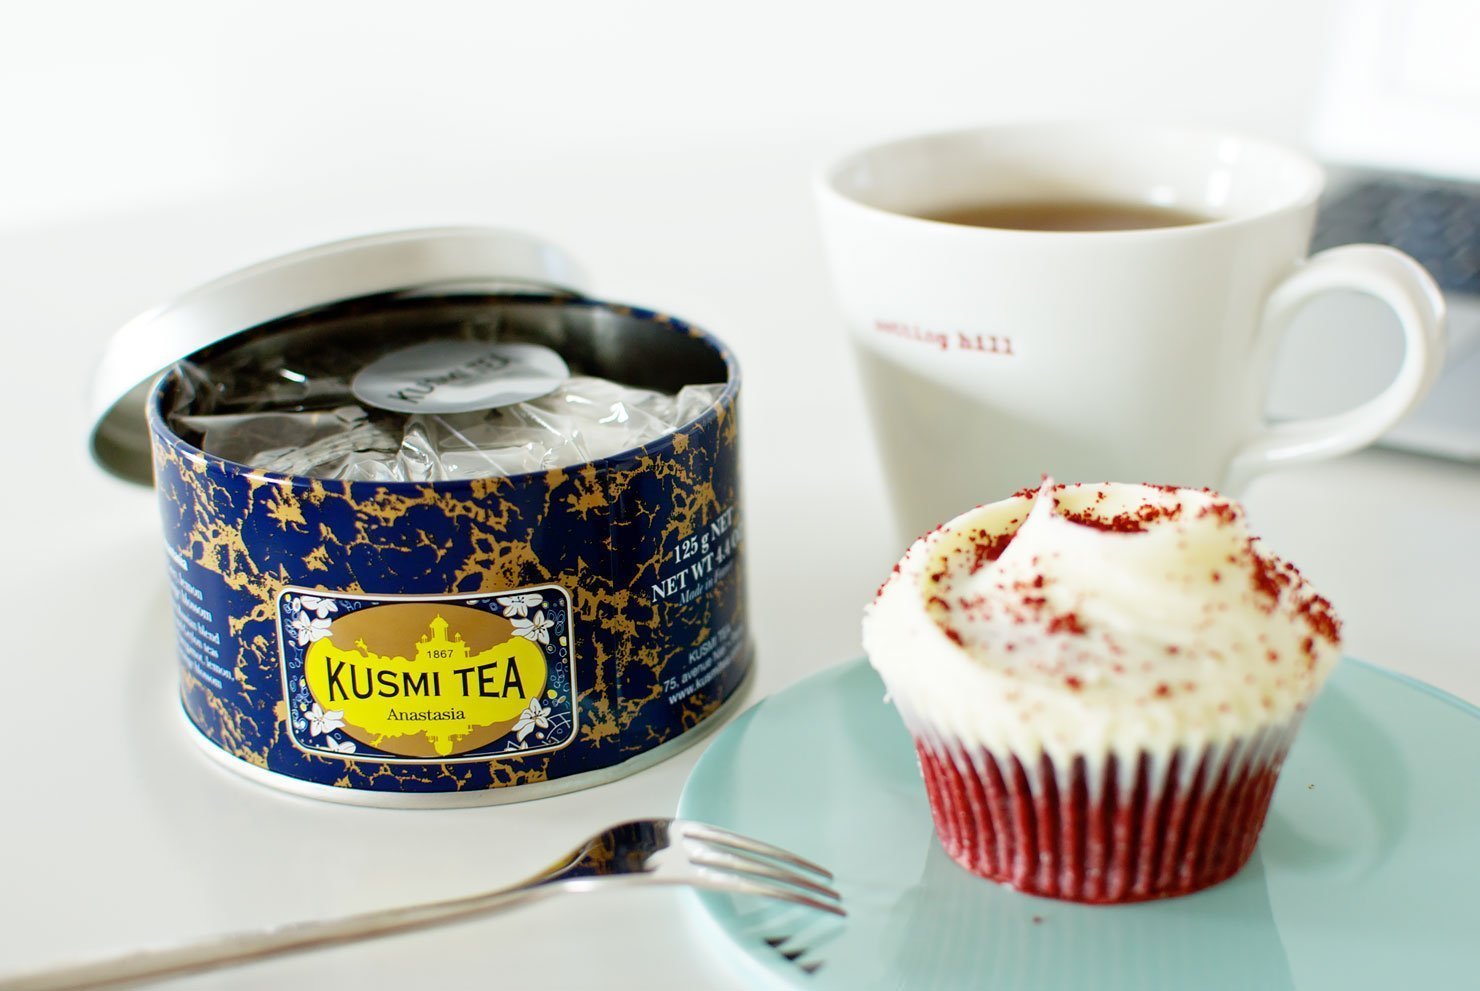 Anastasia tea blend by Kusmi Tea and Hummingbird Bakery cupcake